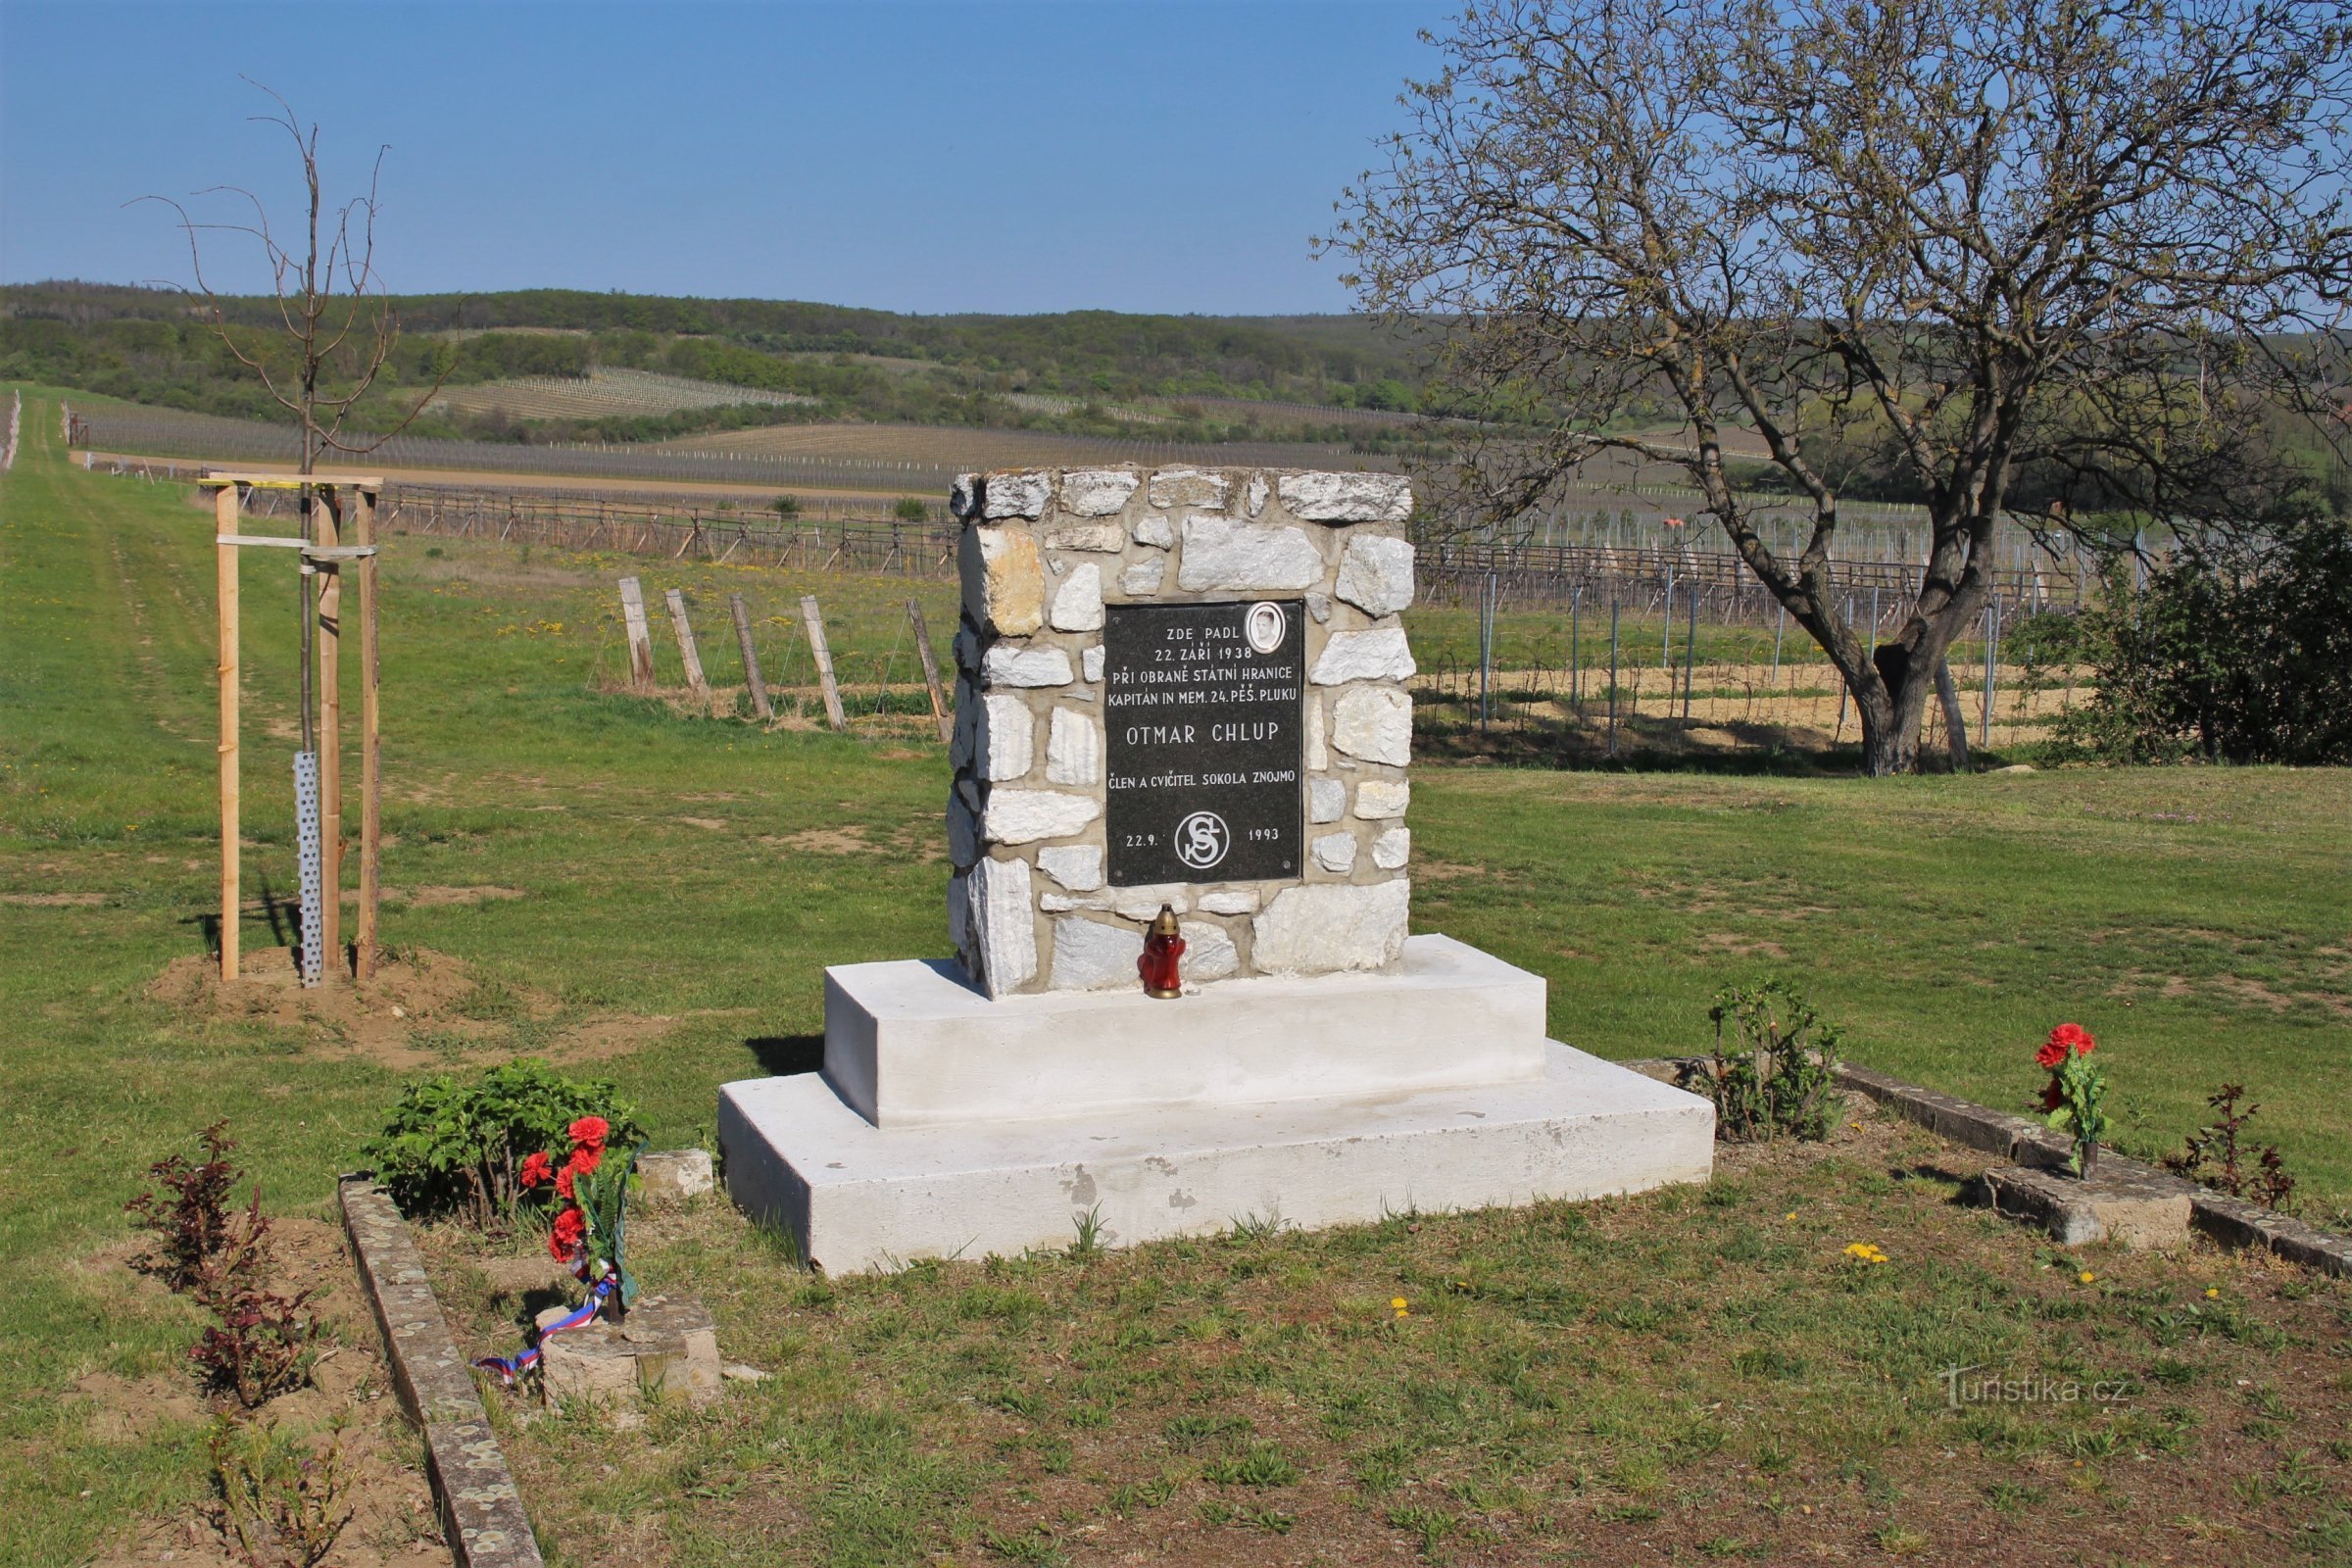 Monument à Otmar Chloupa